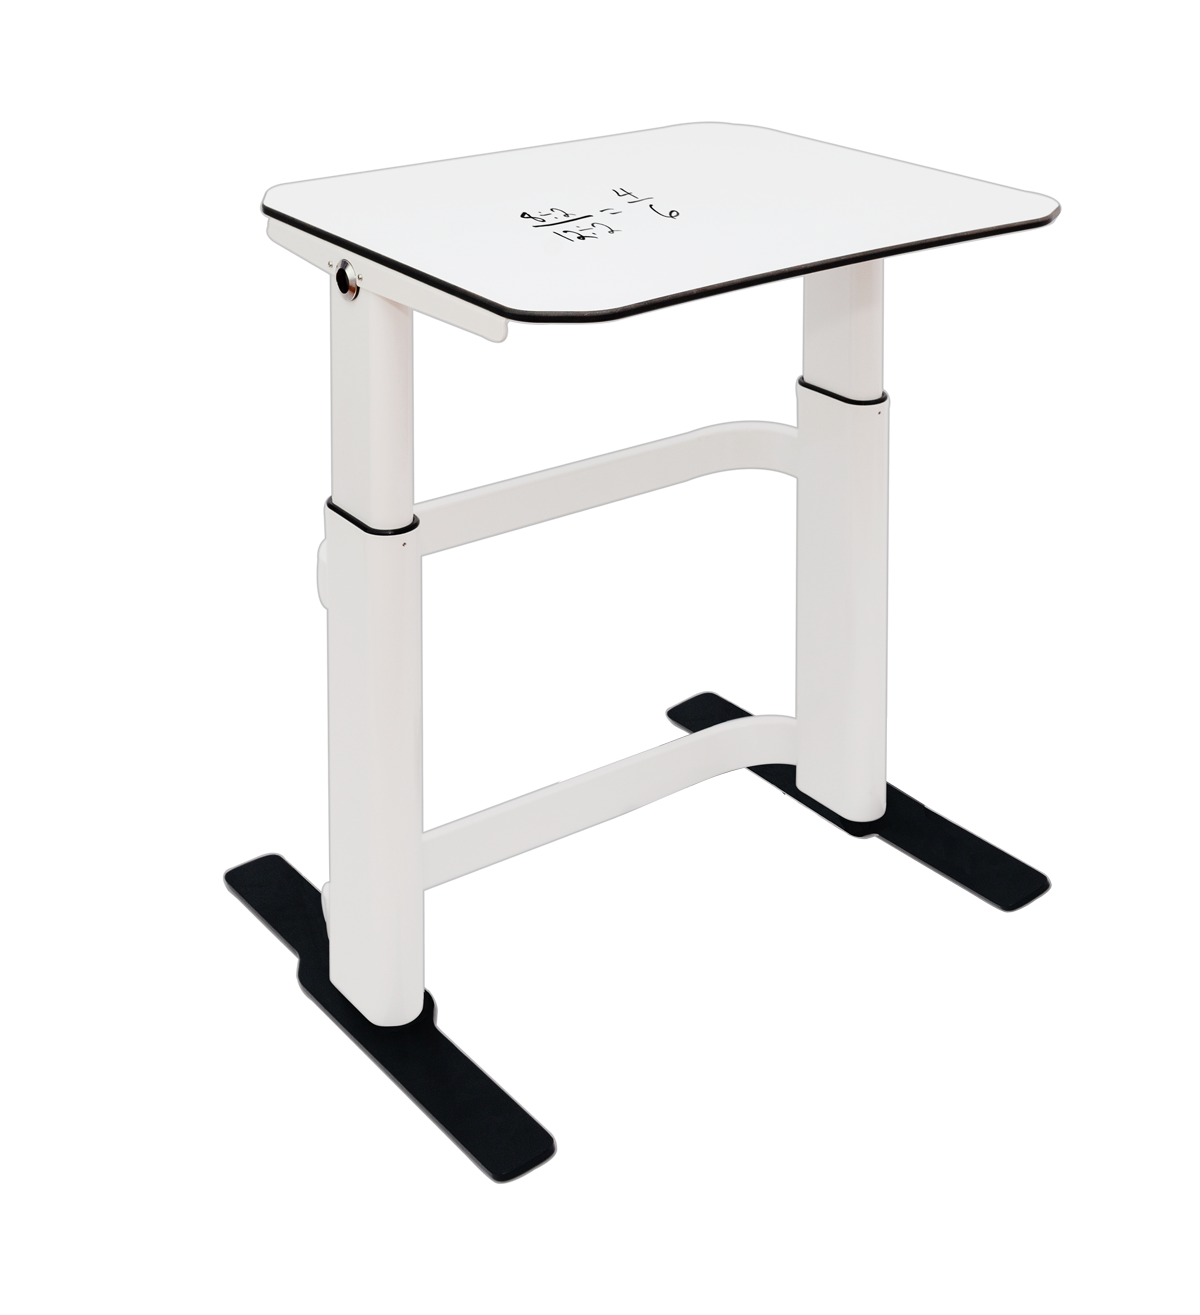 Amperstand-Small Desk-Writable-Steel Feet